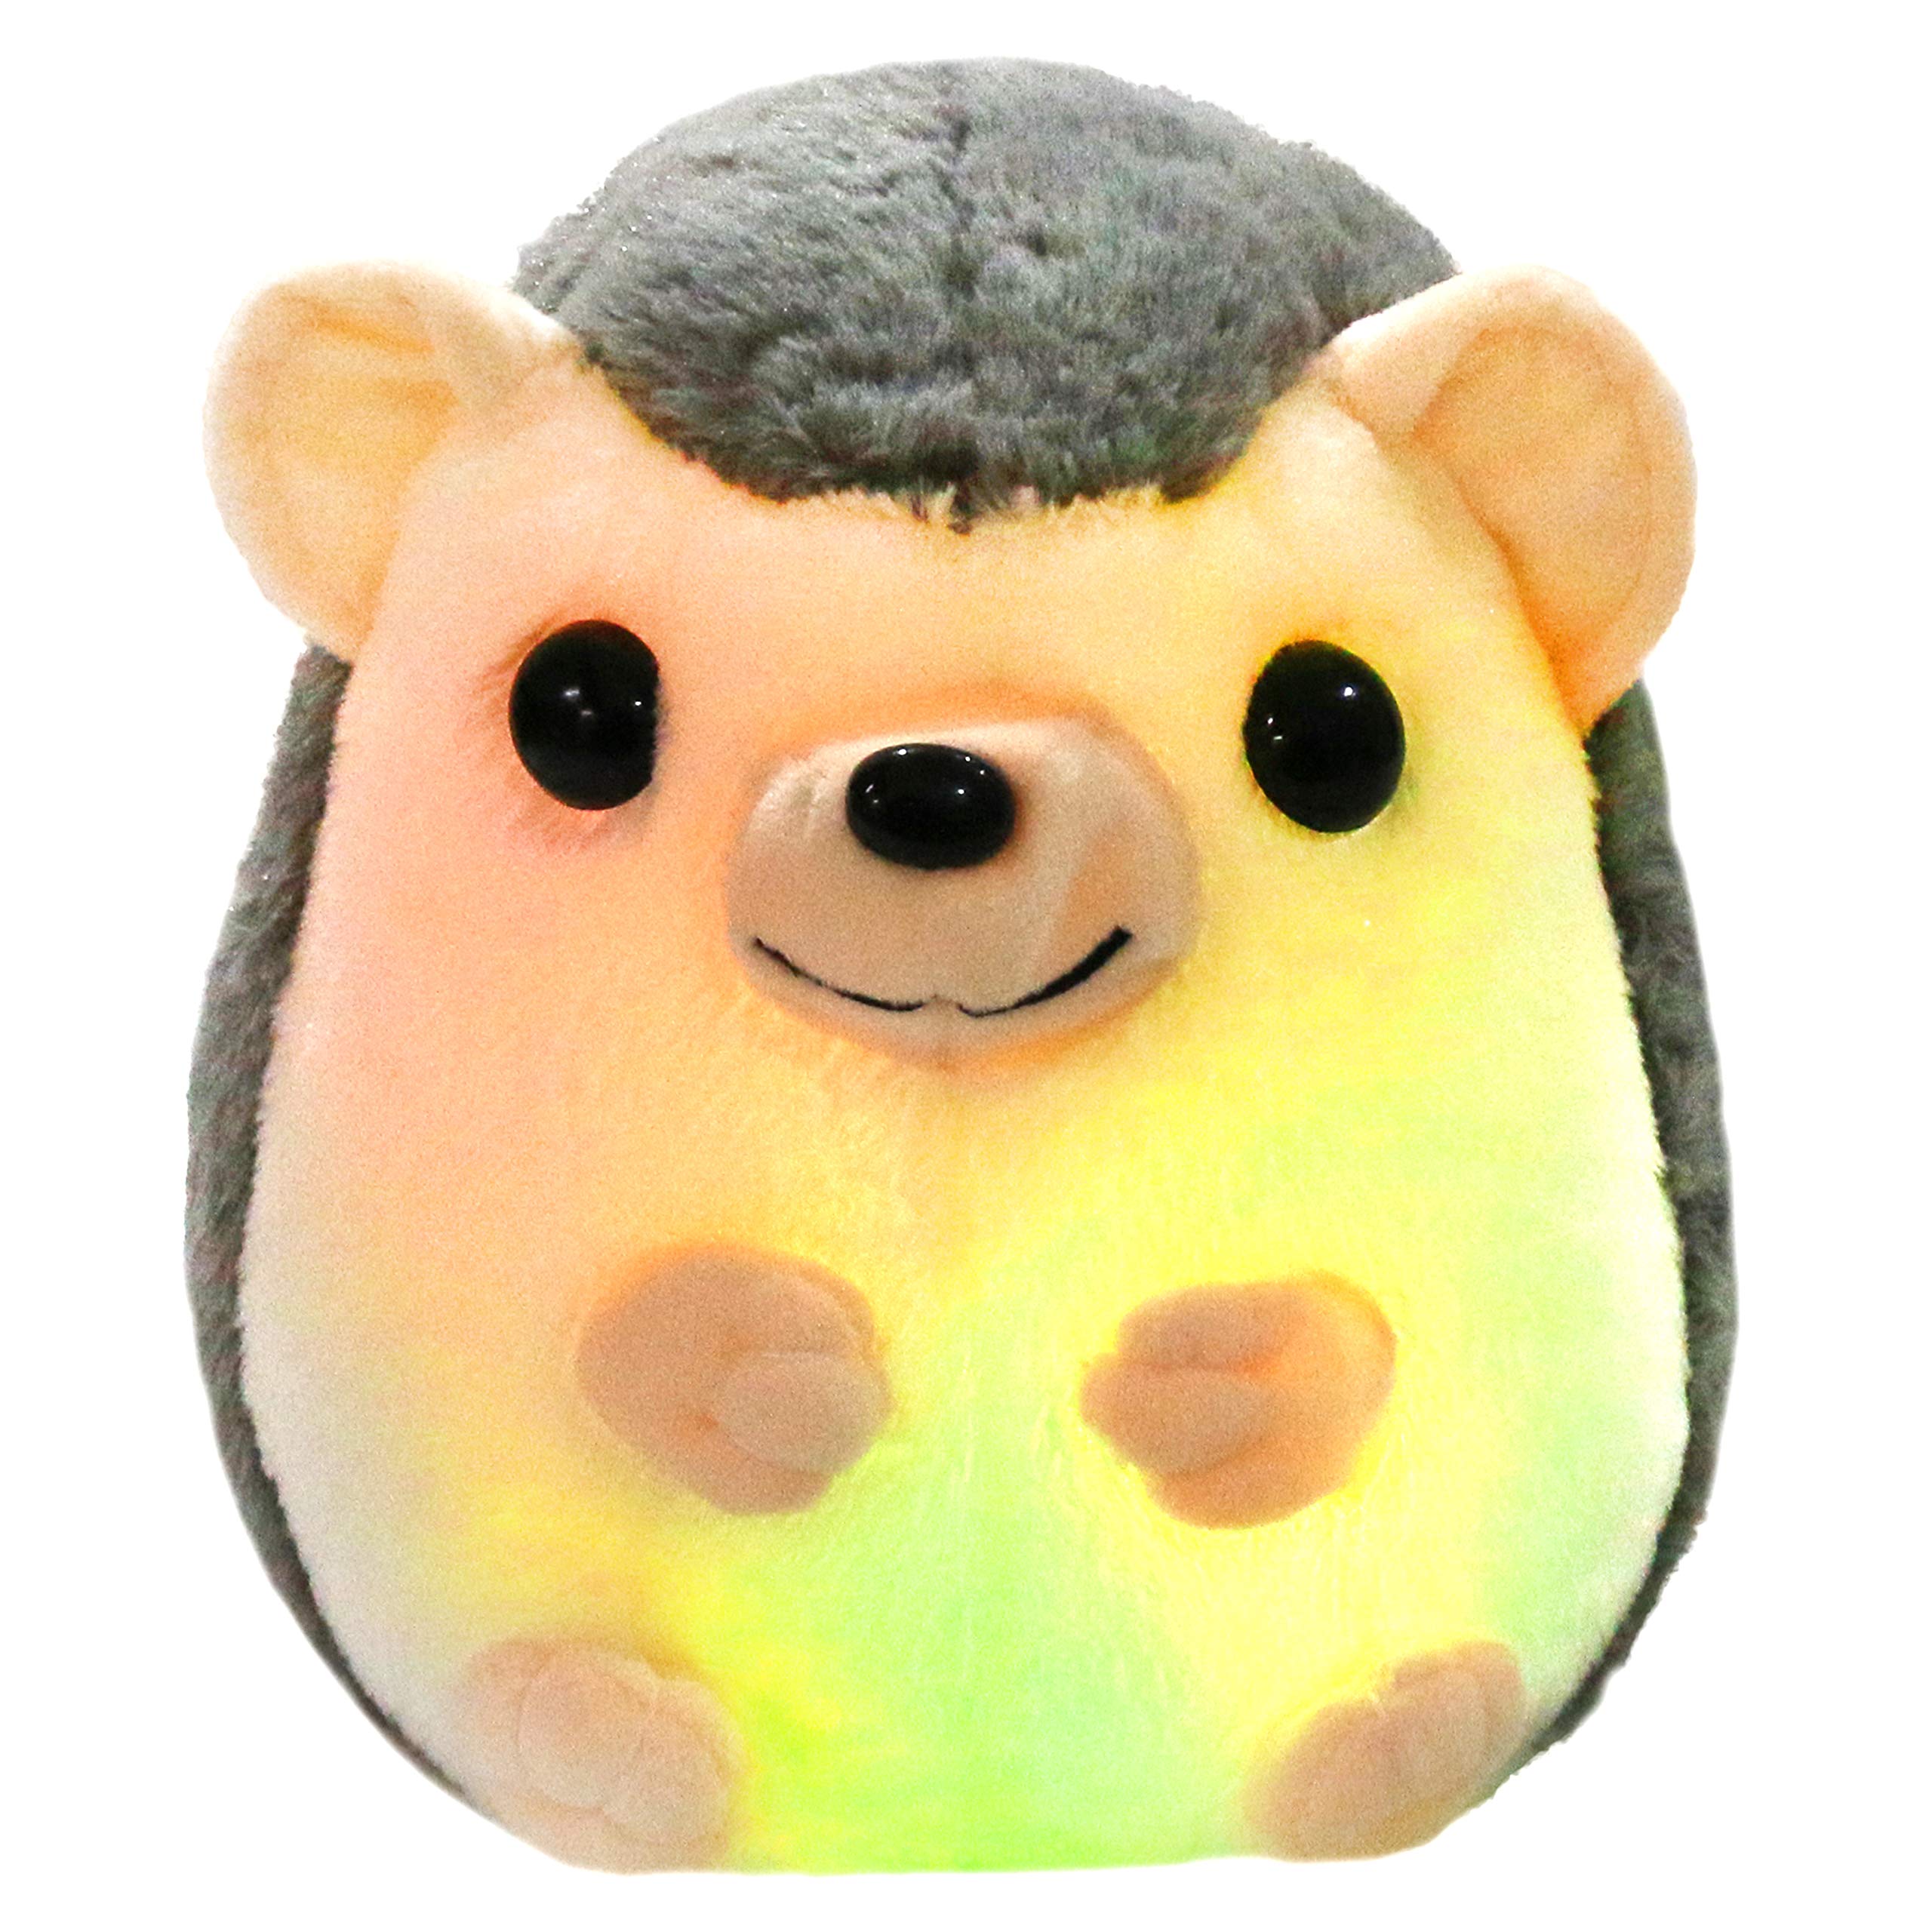 Bstaofy Light up Hedgehog Stuffed Animal Glow Small Plush Toy - Glow Guards